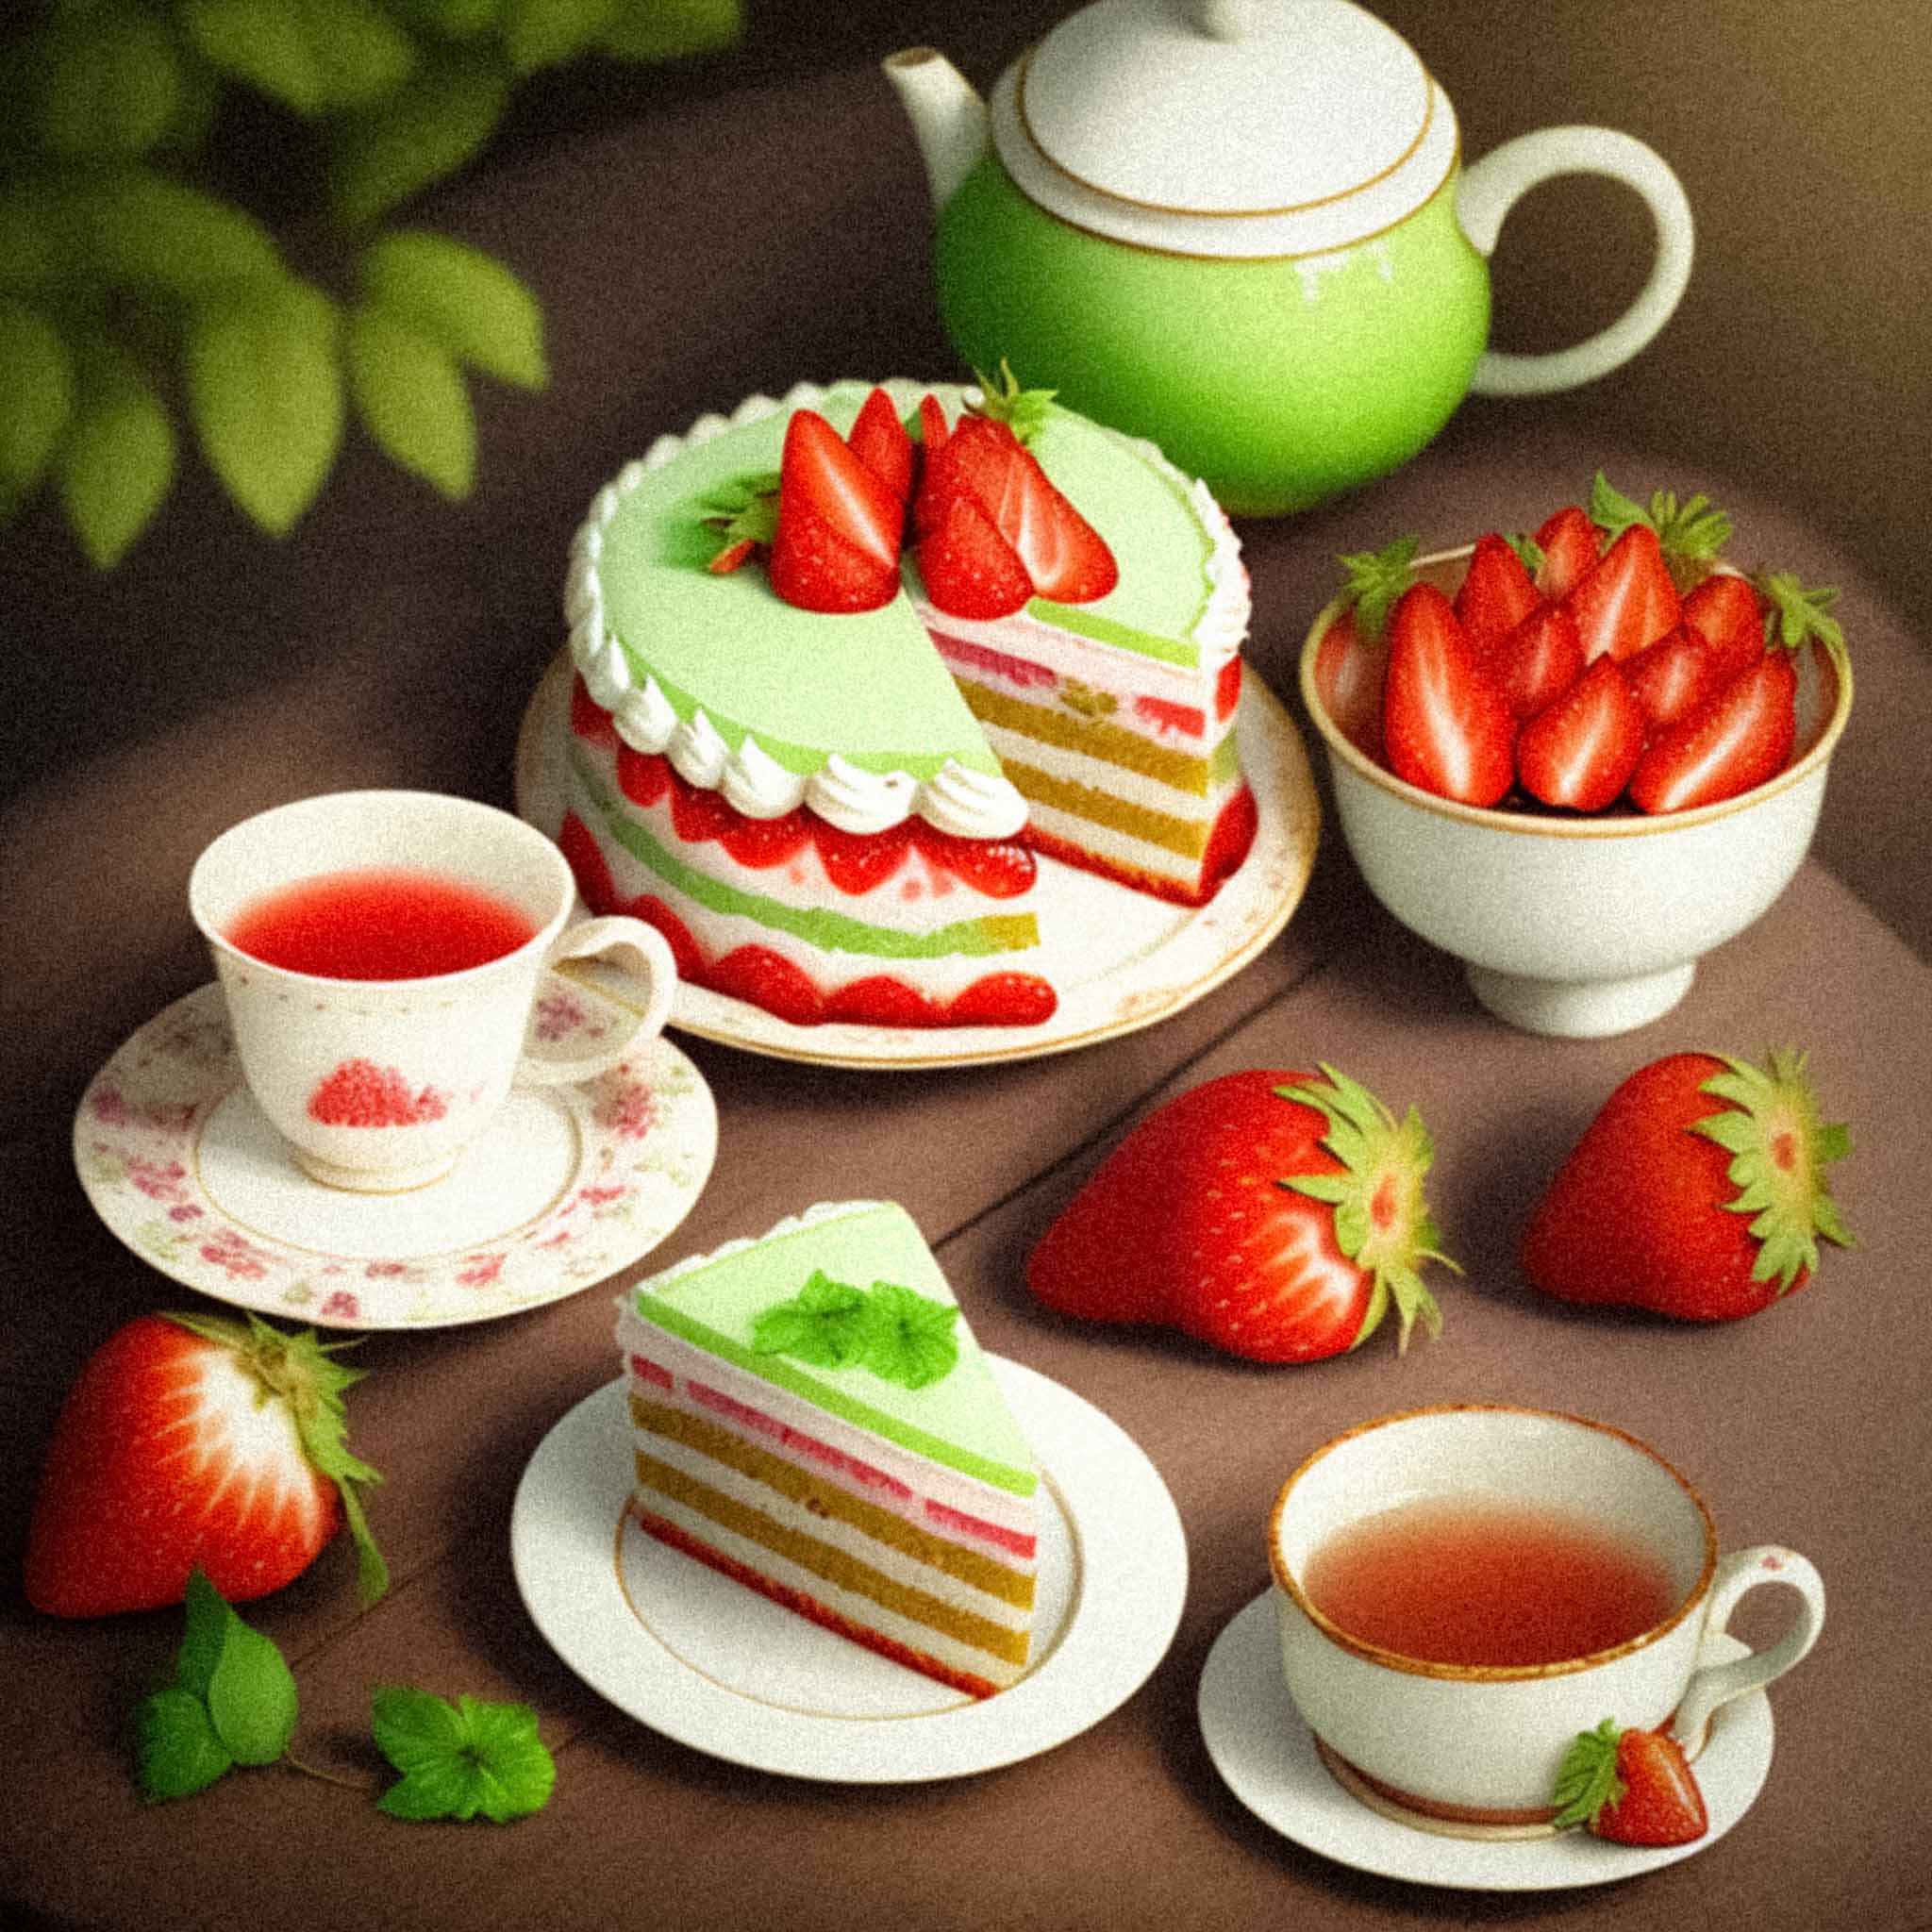 Celebratory Cake and Tea.jpg